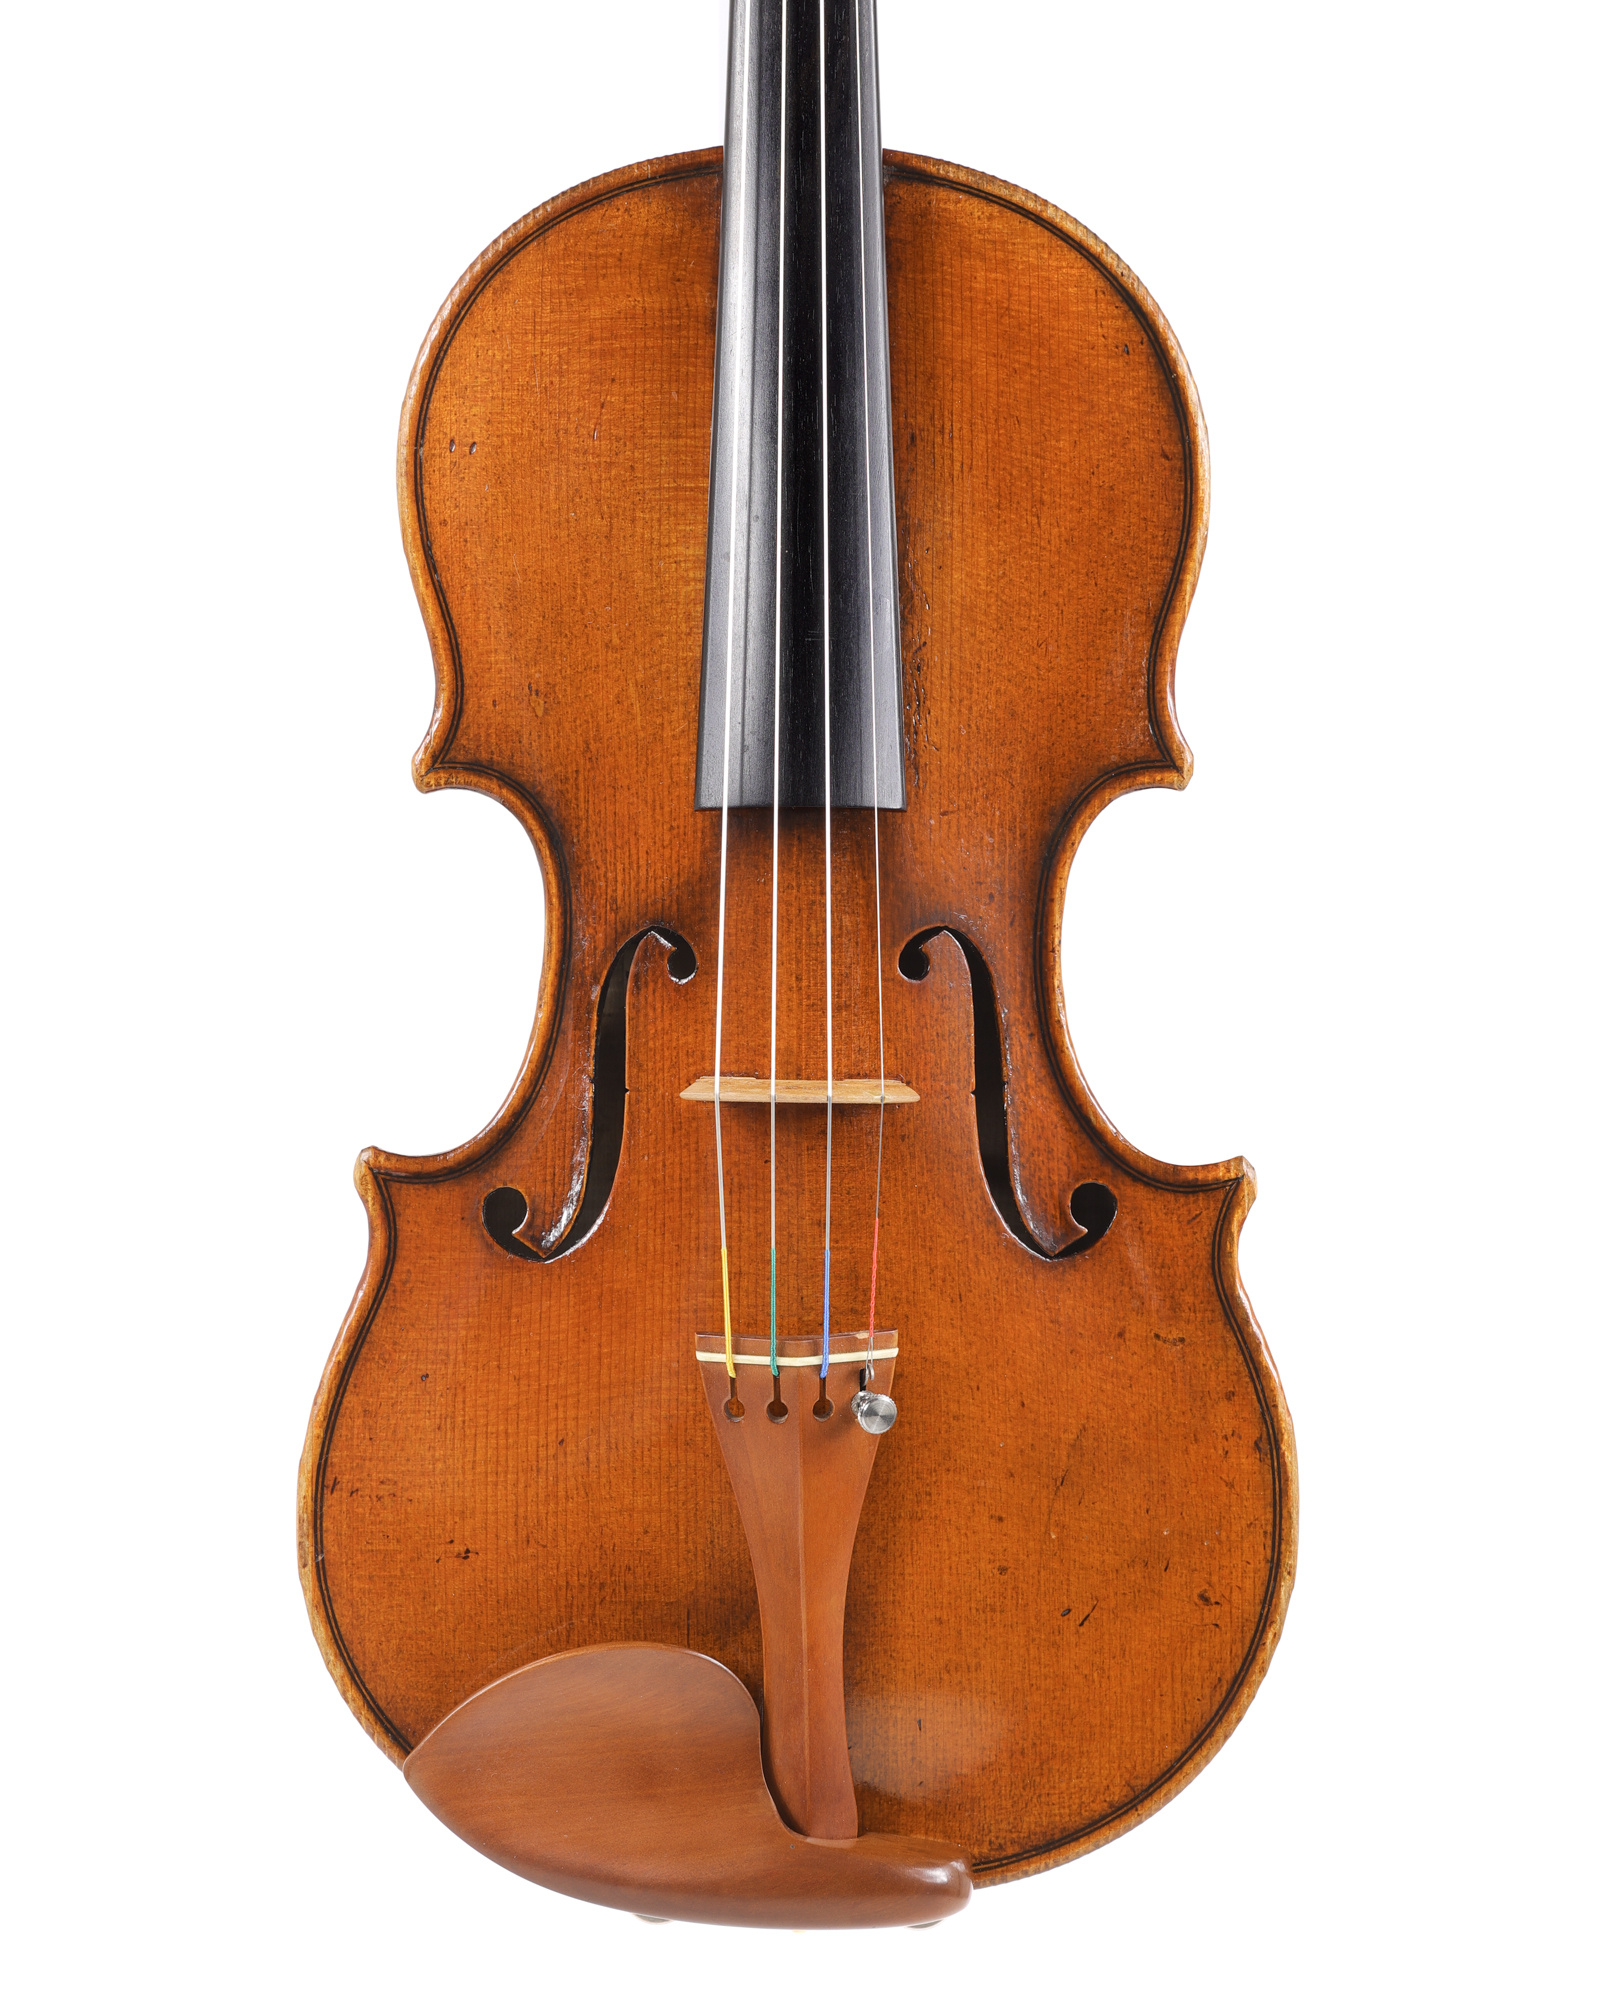 Arlie Moran antiqued violin, opus 6, two-piece back, 1963, Fresno, California (signed)